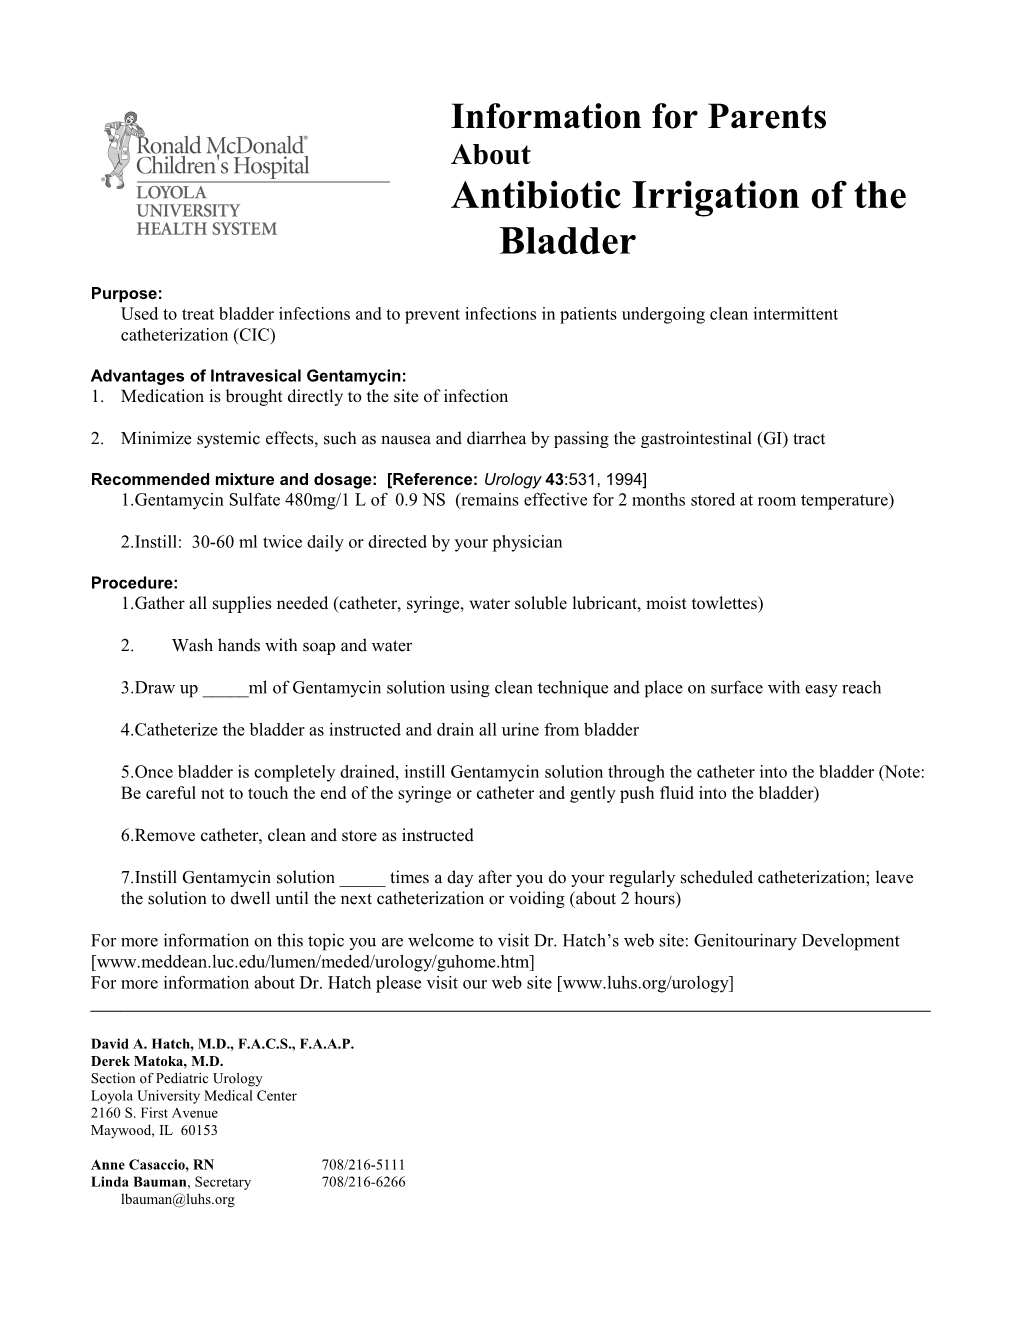 Antibiotic Irrigation of the Bladder